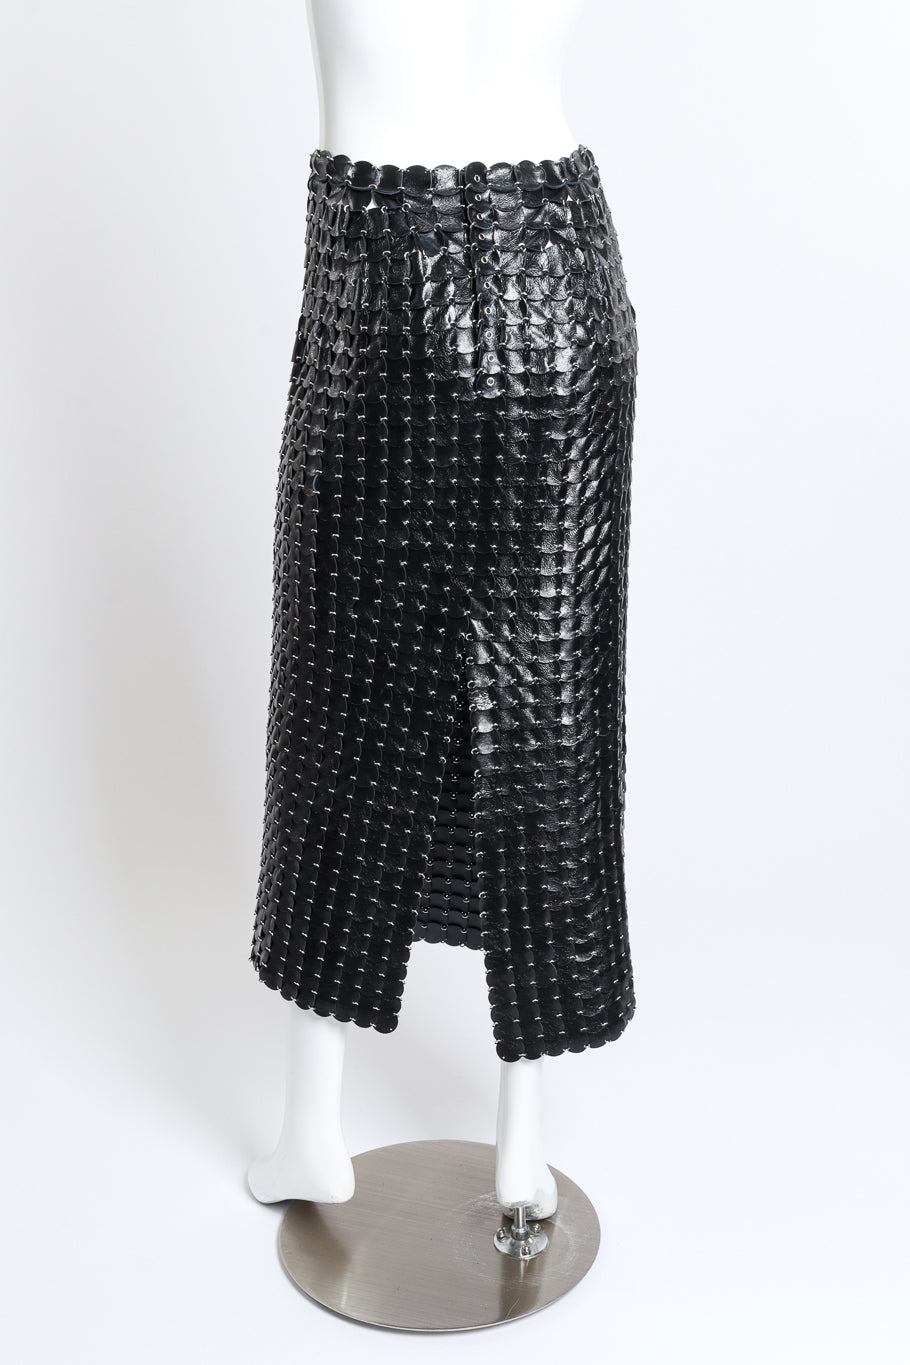 Paco Rabanne 2020 F/W Skirt back mannequin @RECESS LA